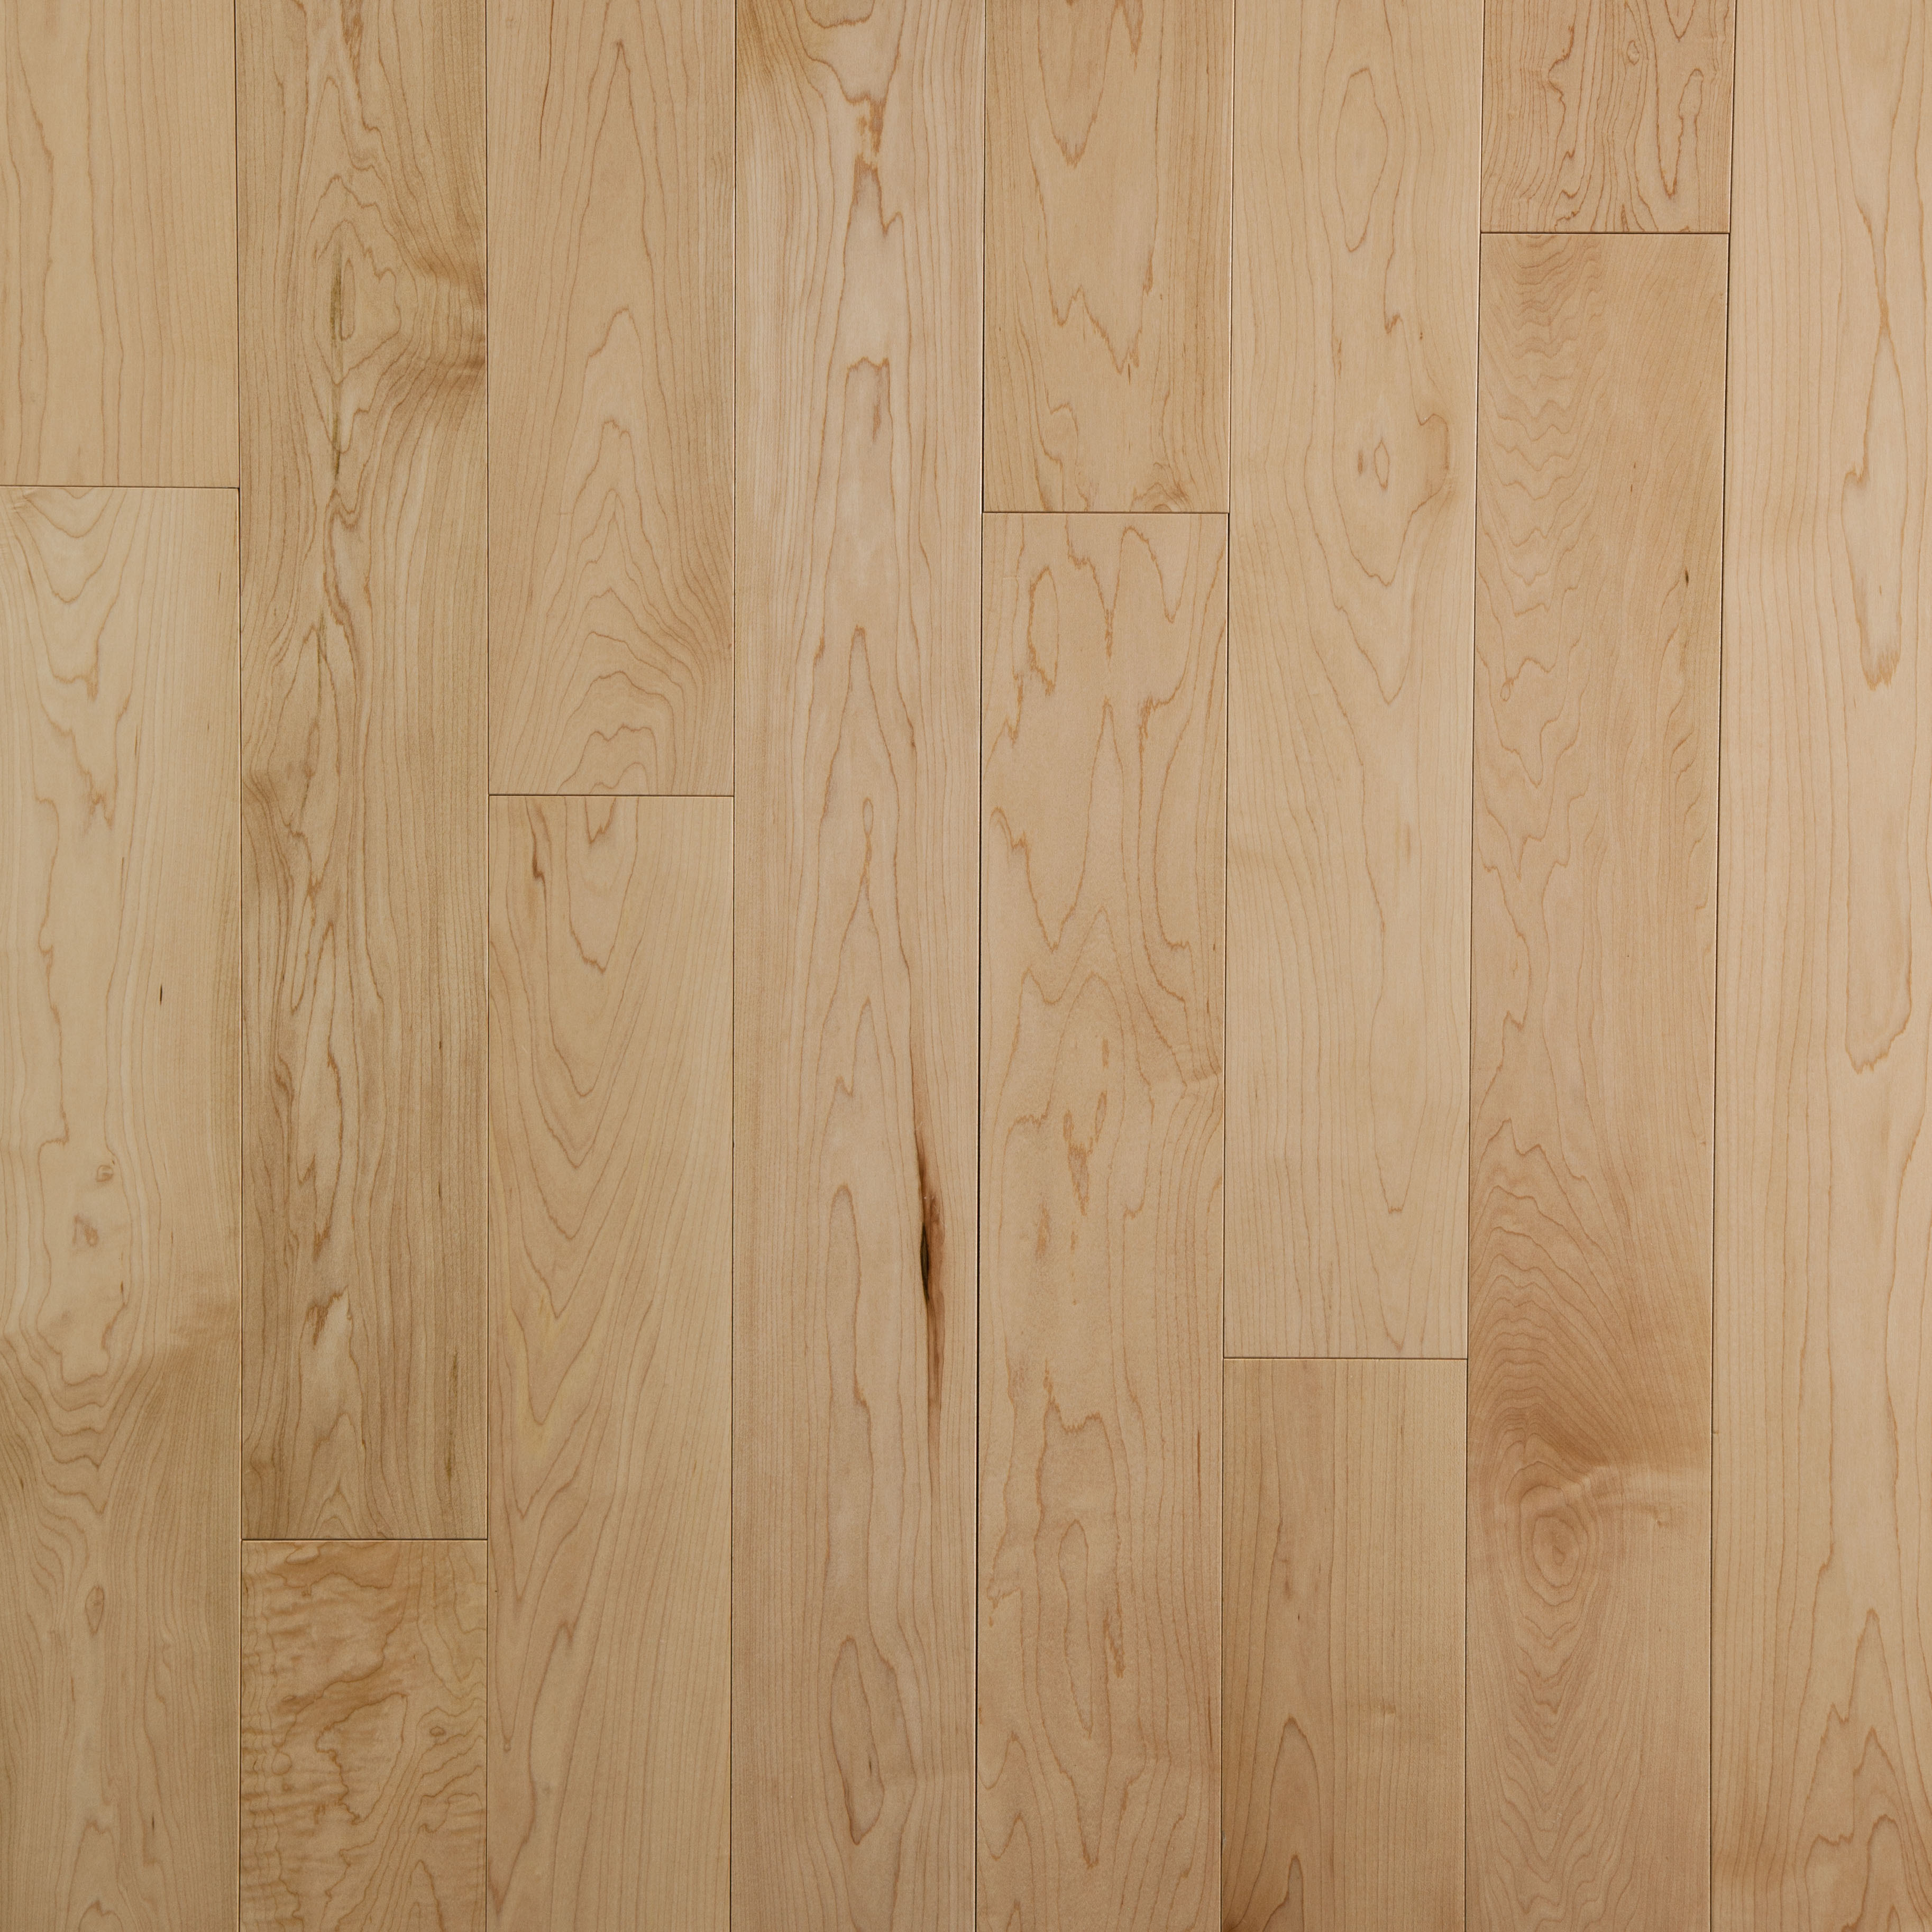 10 Popular Hardwood Floor Refinishing Detroit 2022 free download hardwood floor refinishing detroit of hardwood lumber phoenix hardwood lumber intended for phoenix hardwood lumber photos